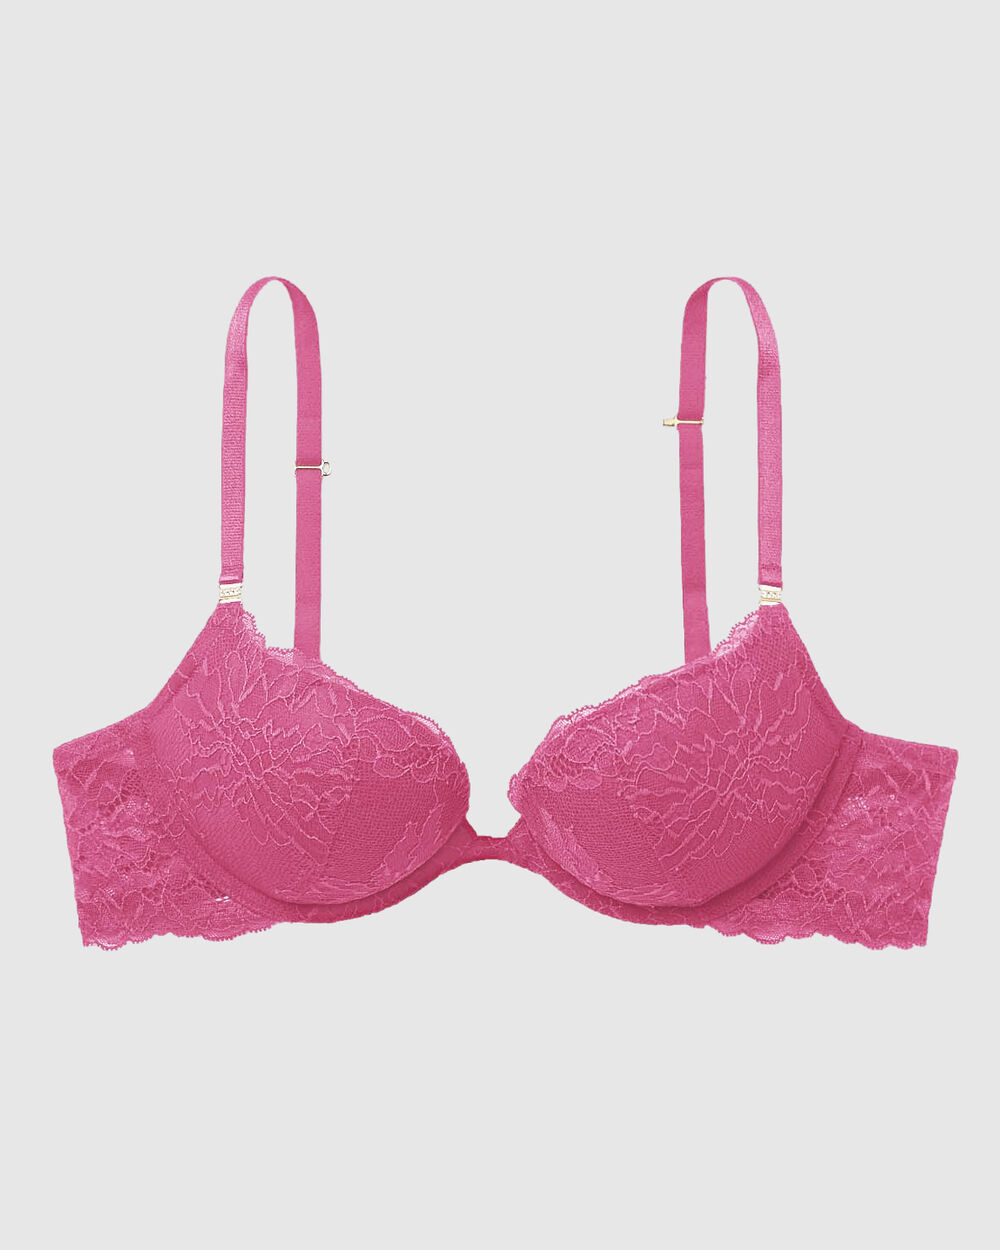 32DD Victoria's Secret Pink Bra  Victoria secret pink bras, Pink bra,  Victoria's secret pink